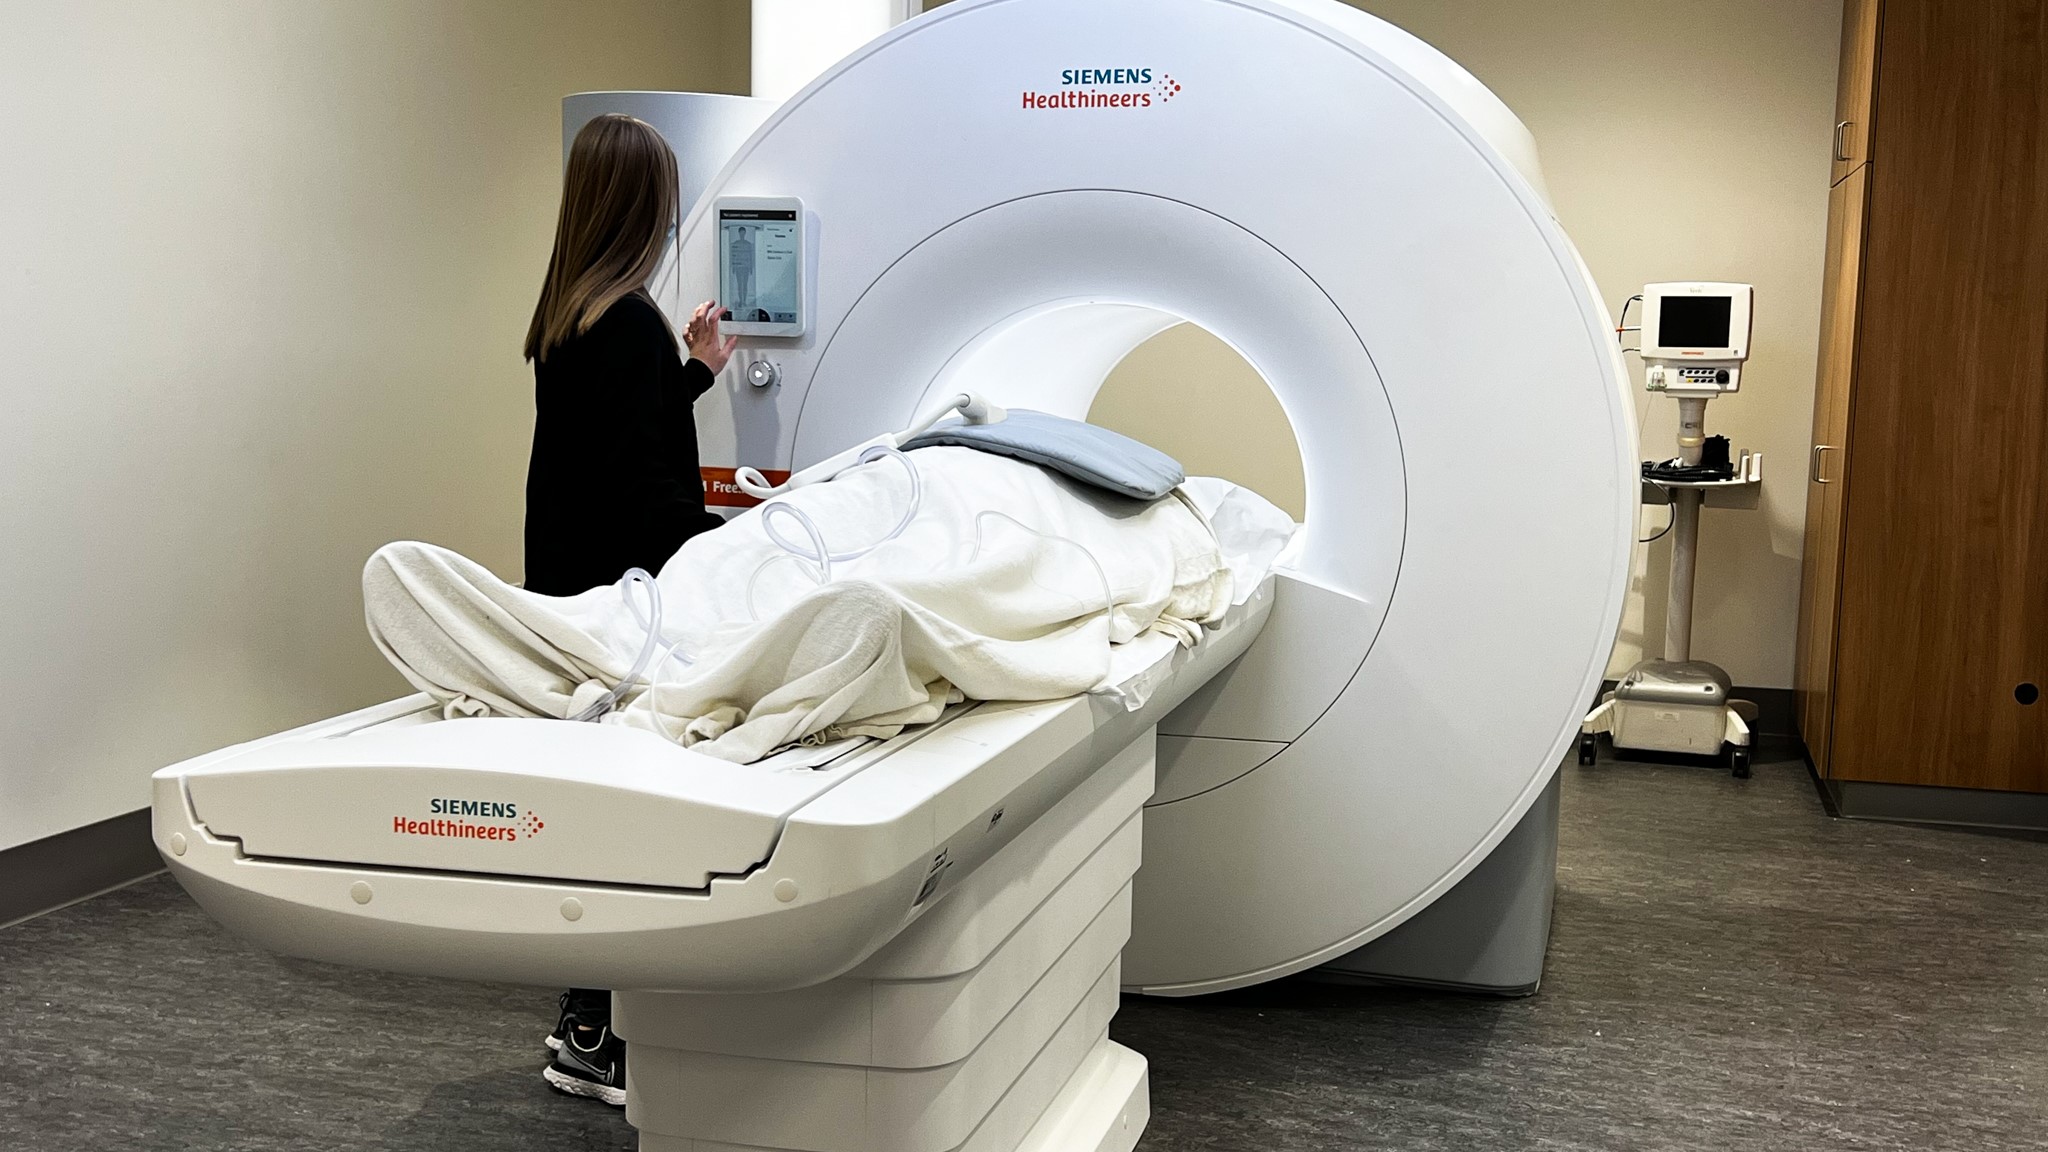 MRI Radiology Patient